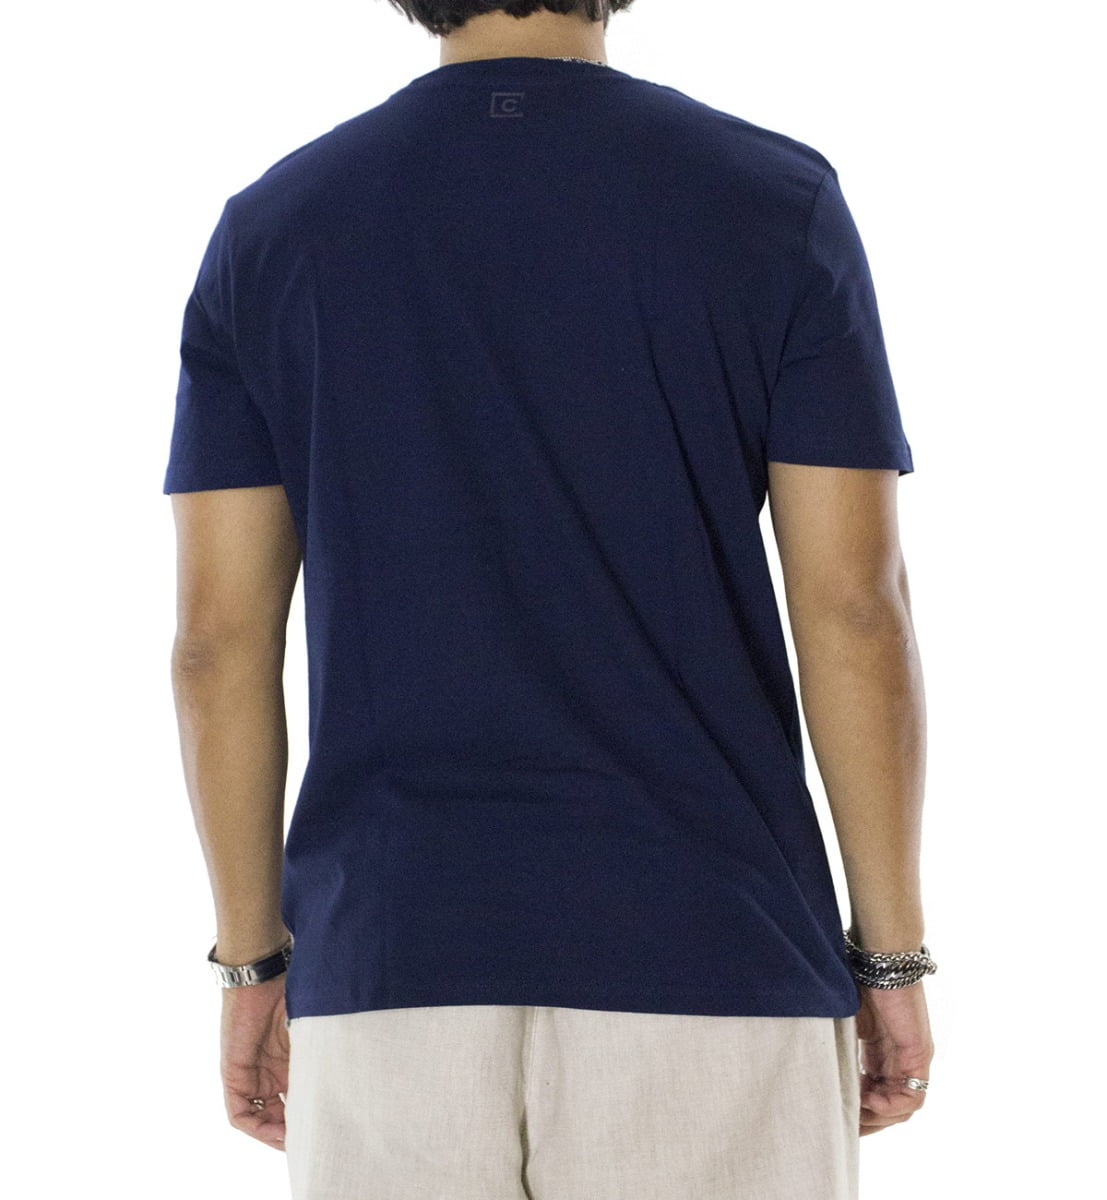 T-shirt da uomo in cotone organico tinta unita blu regular fit elasticizzata girocollo